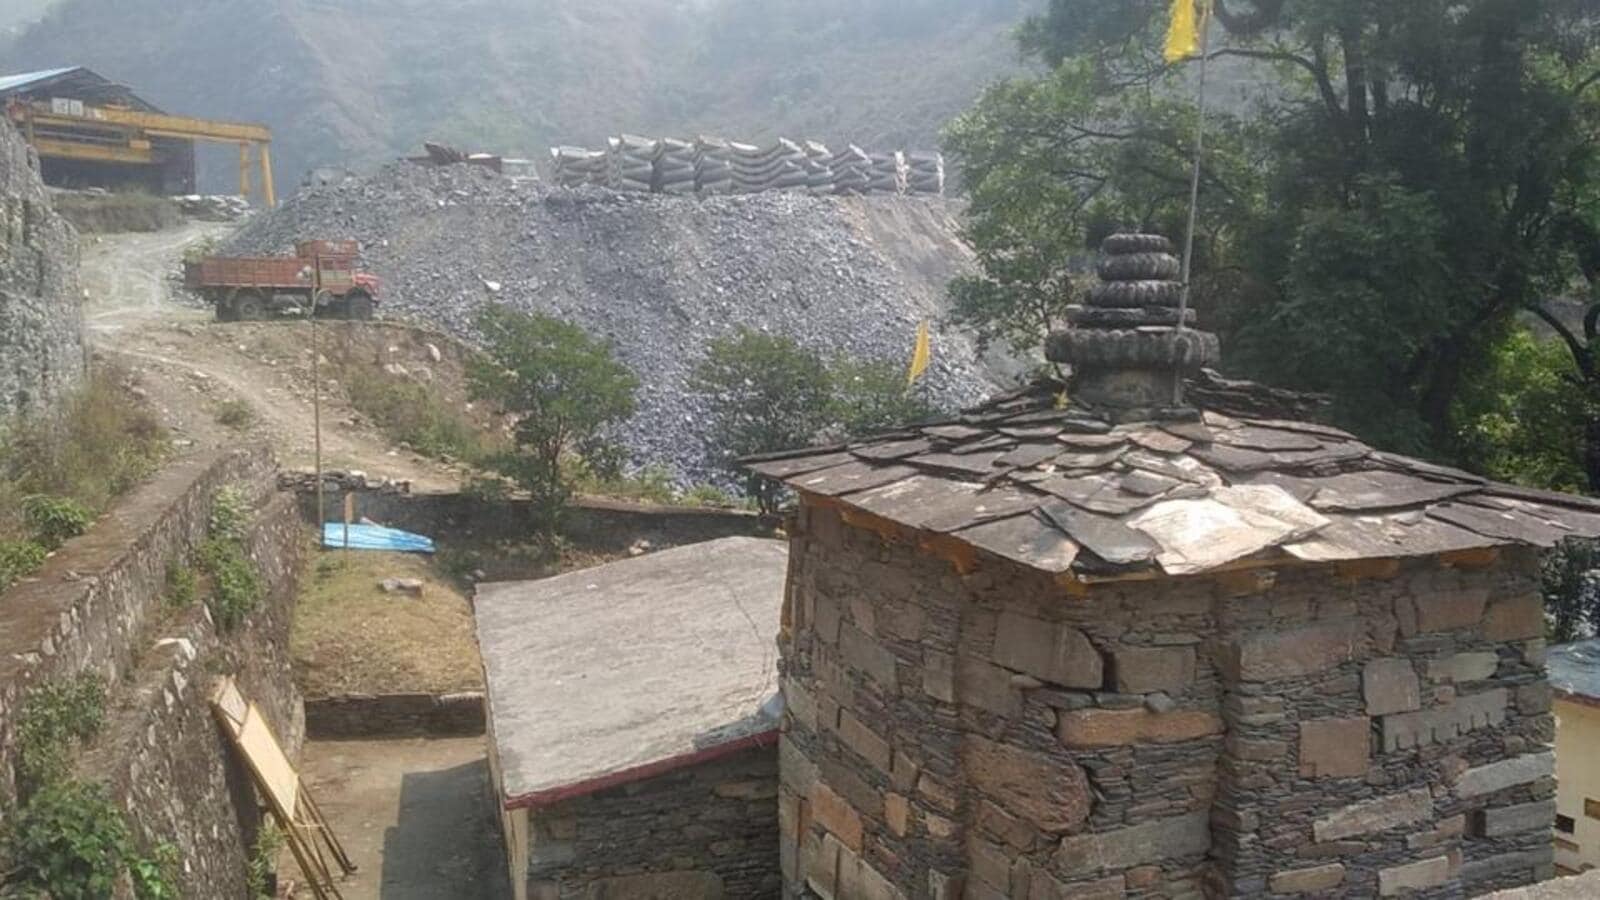 Uttarakhand HC issues directions to halt muck dumping near Chamoli temple